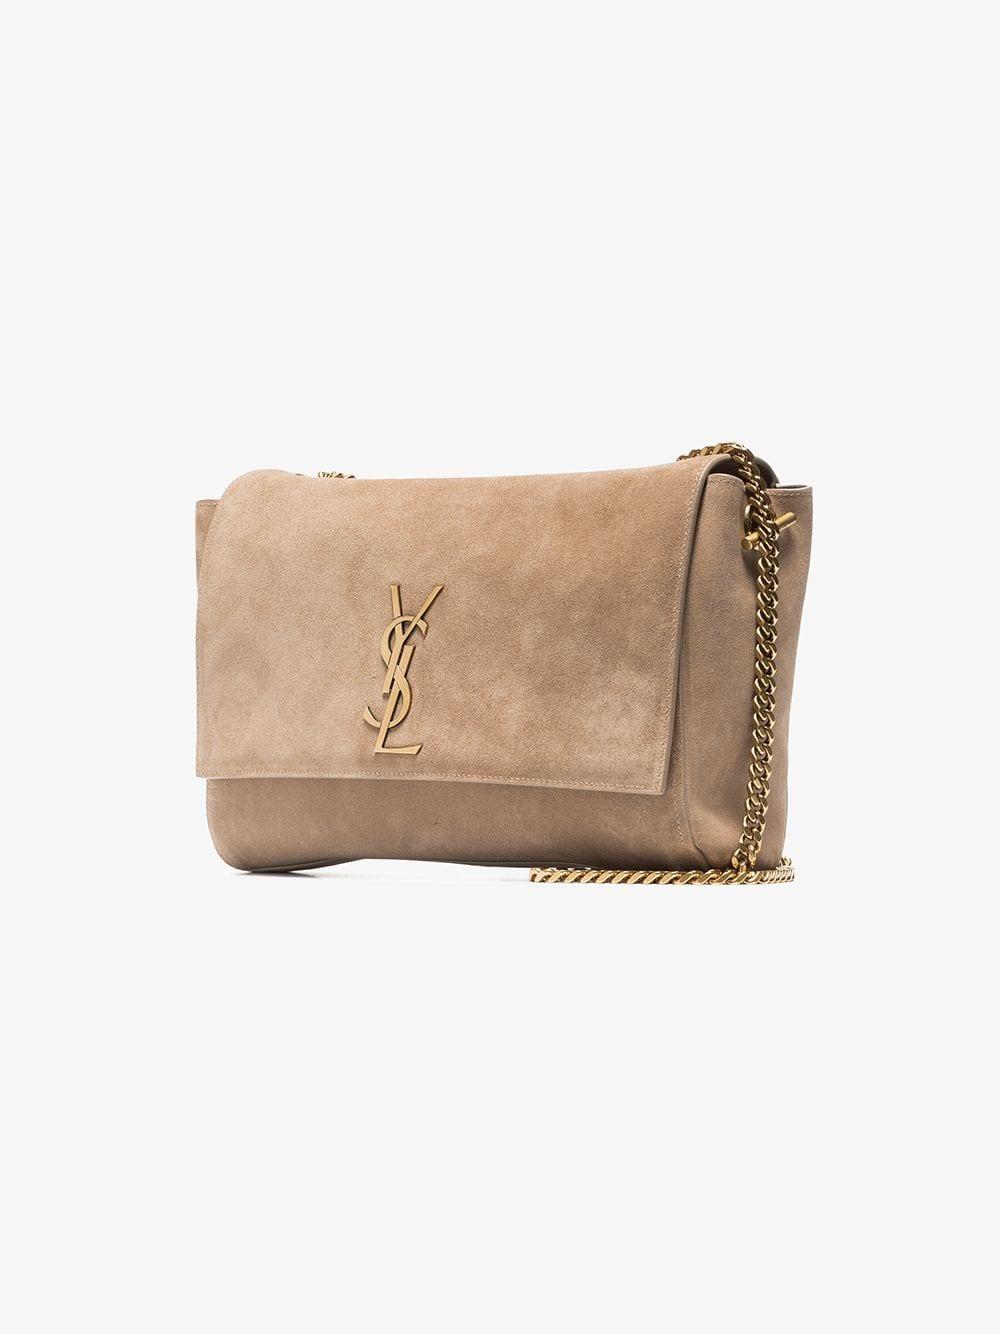 Solférino leather handbag Saint Laurent Beige in Leather - 33965204